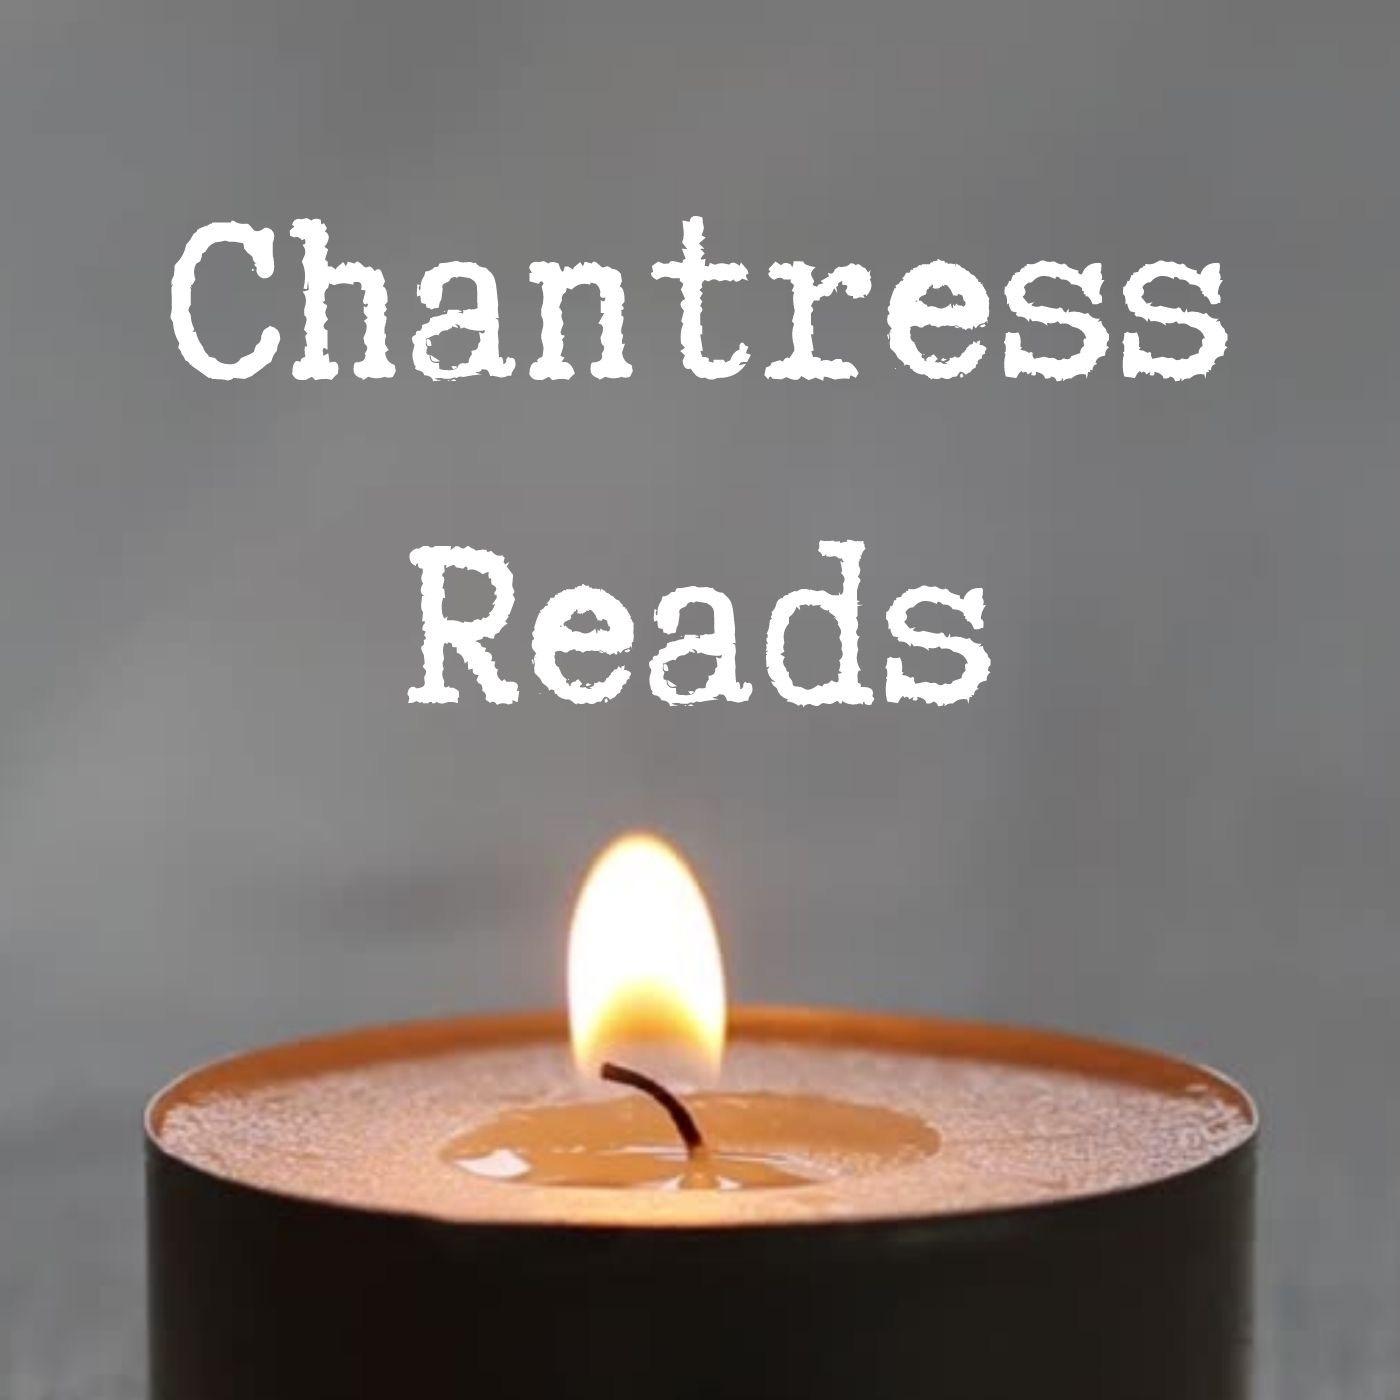 Chantress Reads